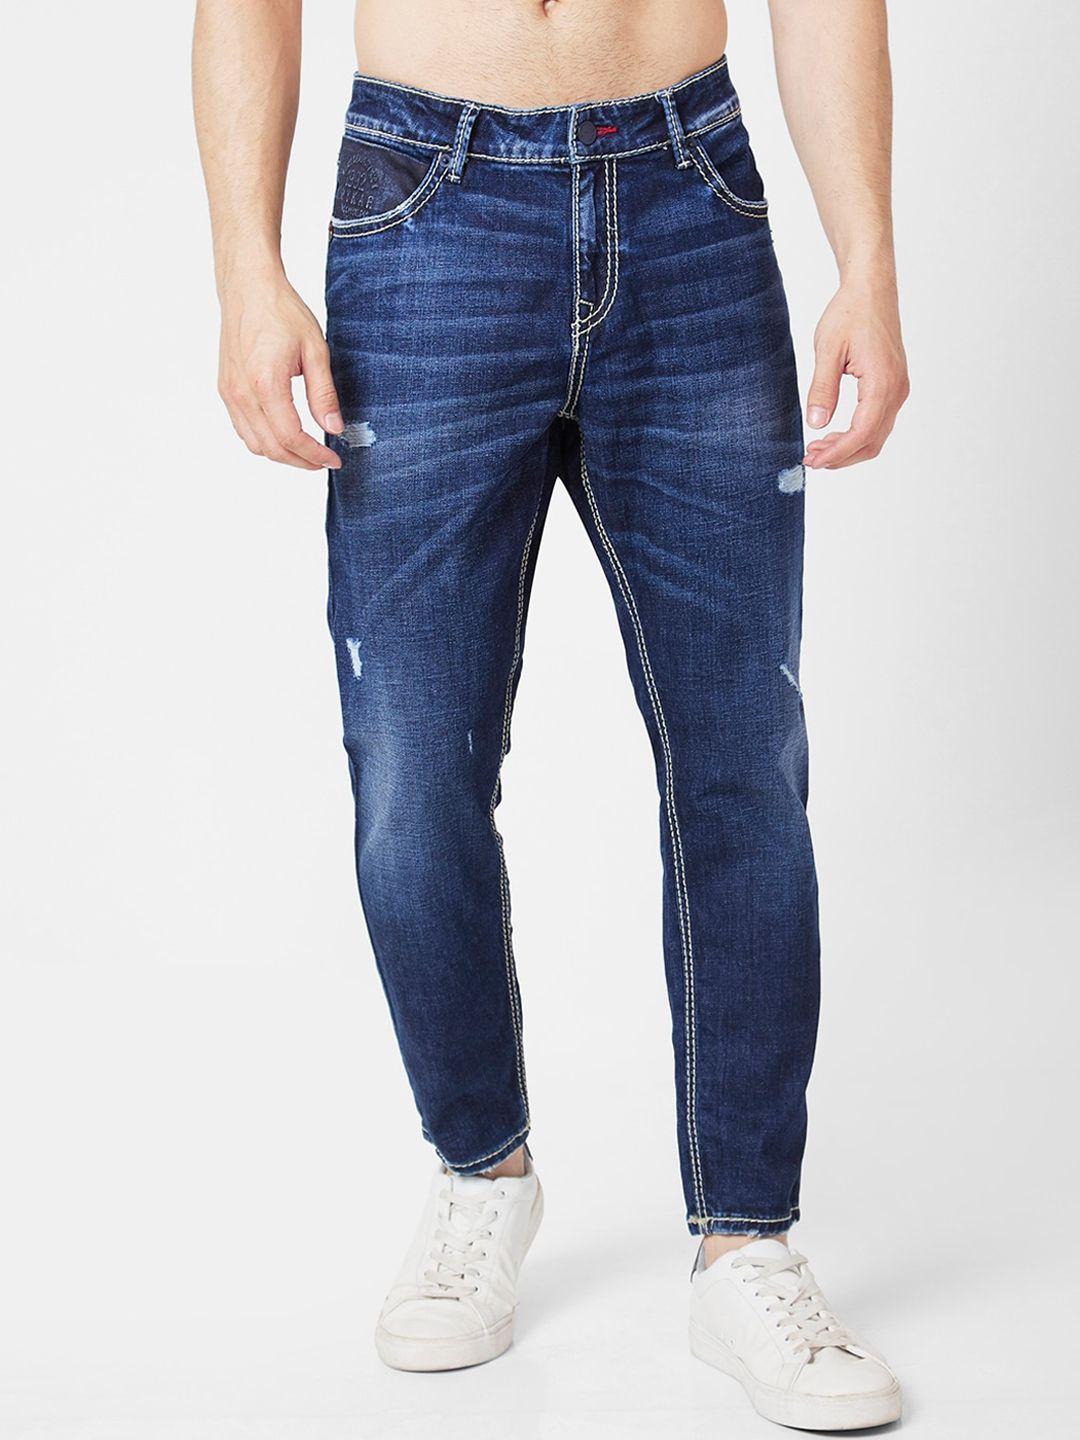 spykar-men-cotton-kano-slim-fit-low-distressed-light-fade-jeans